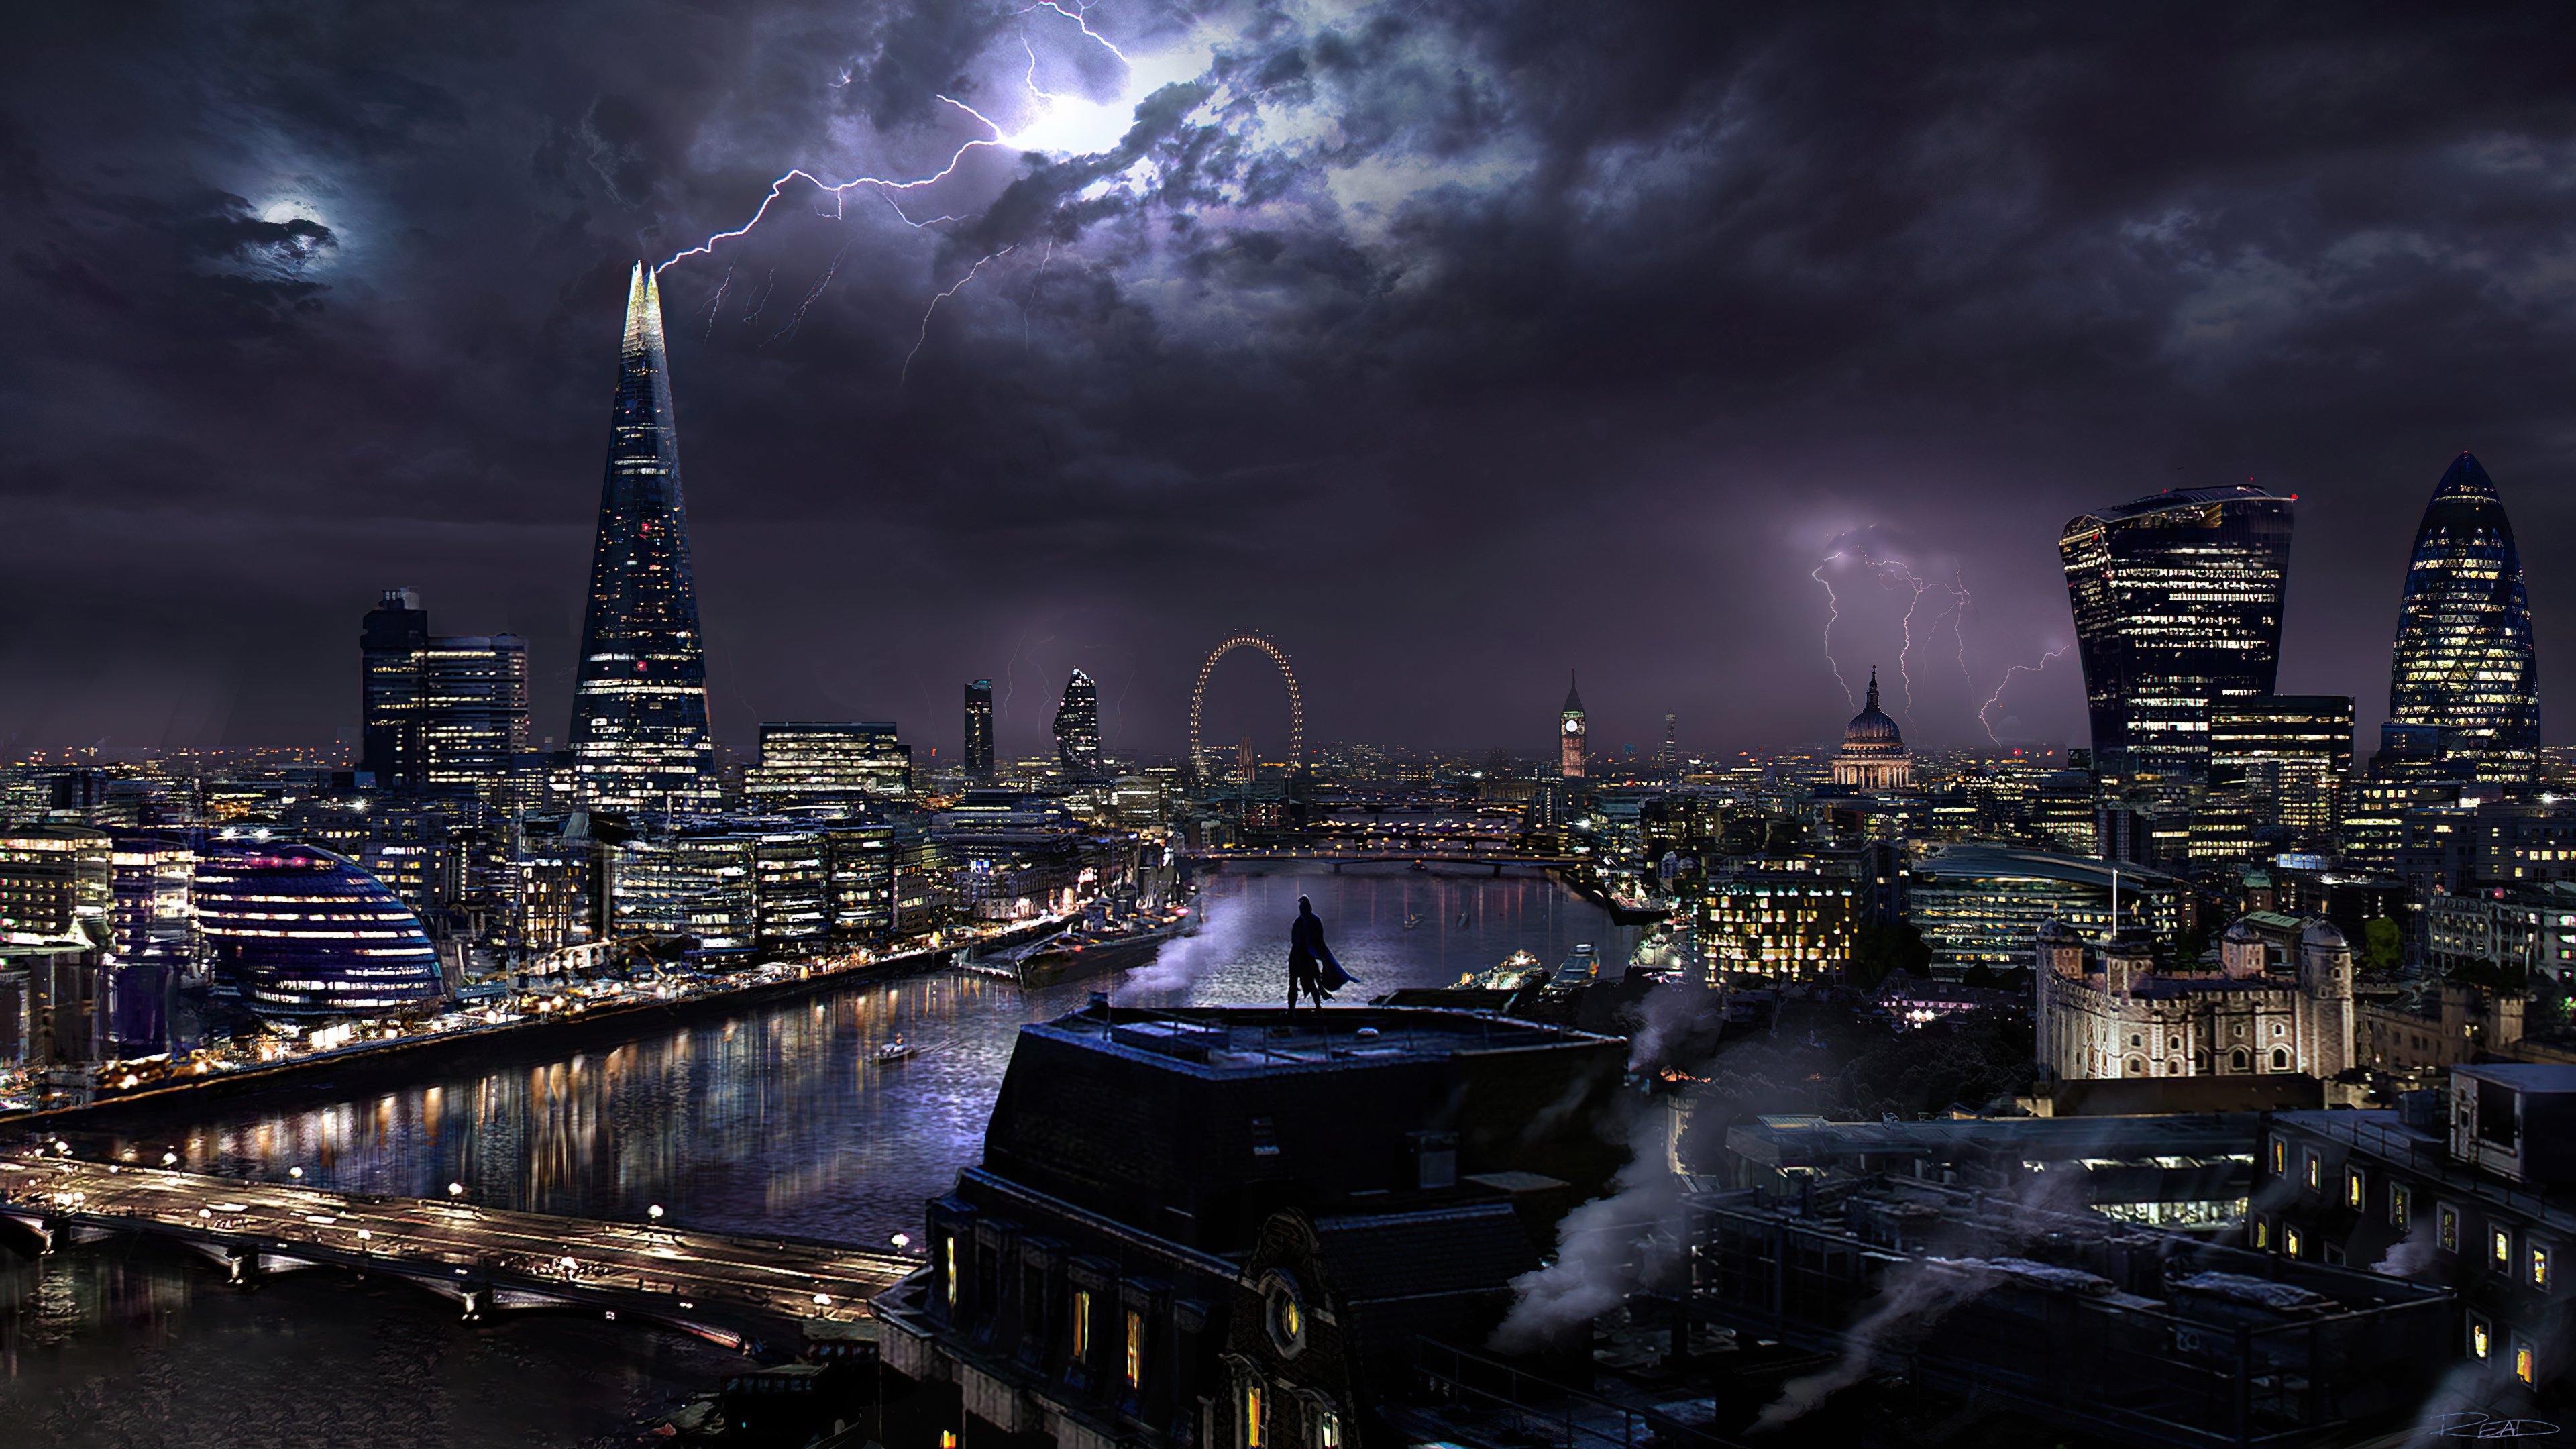 Fondos de pantalla Moon Knight en Londres